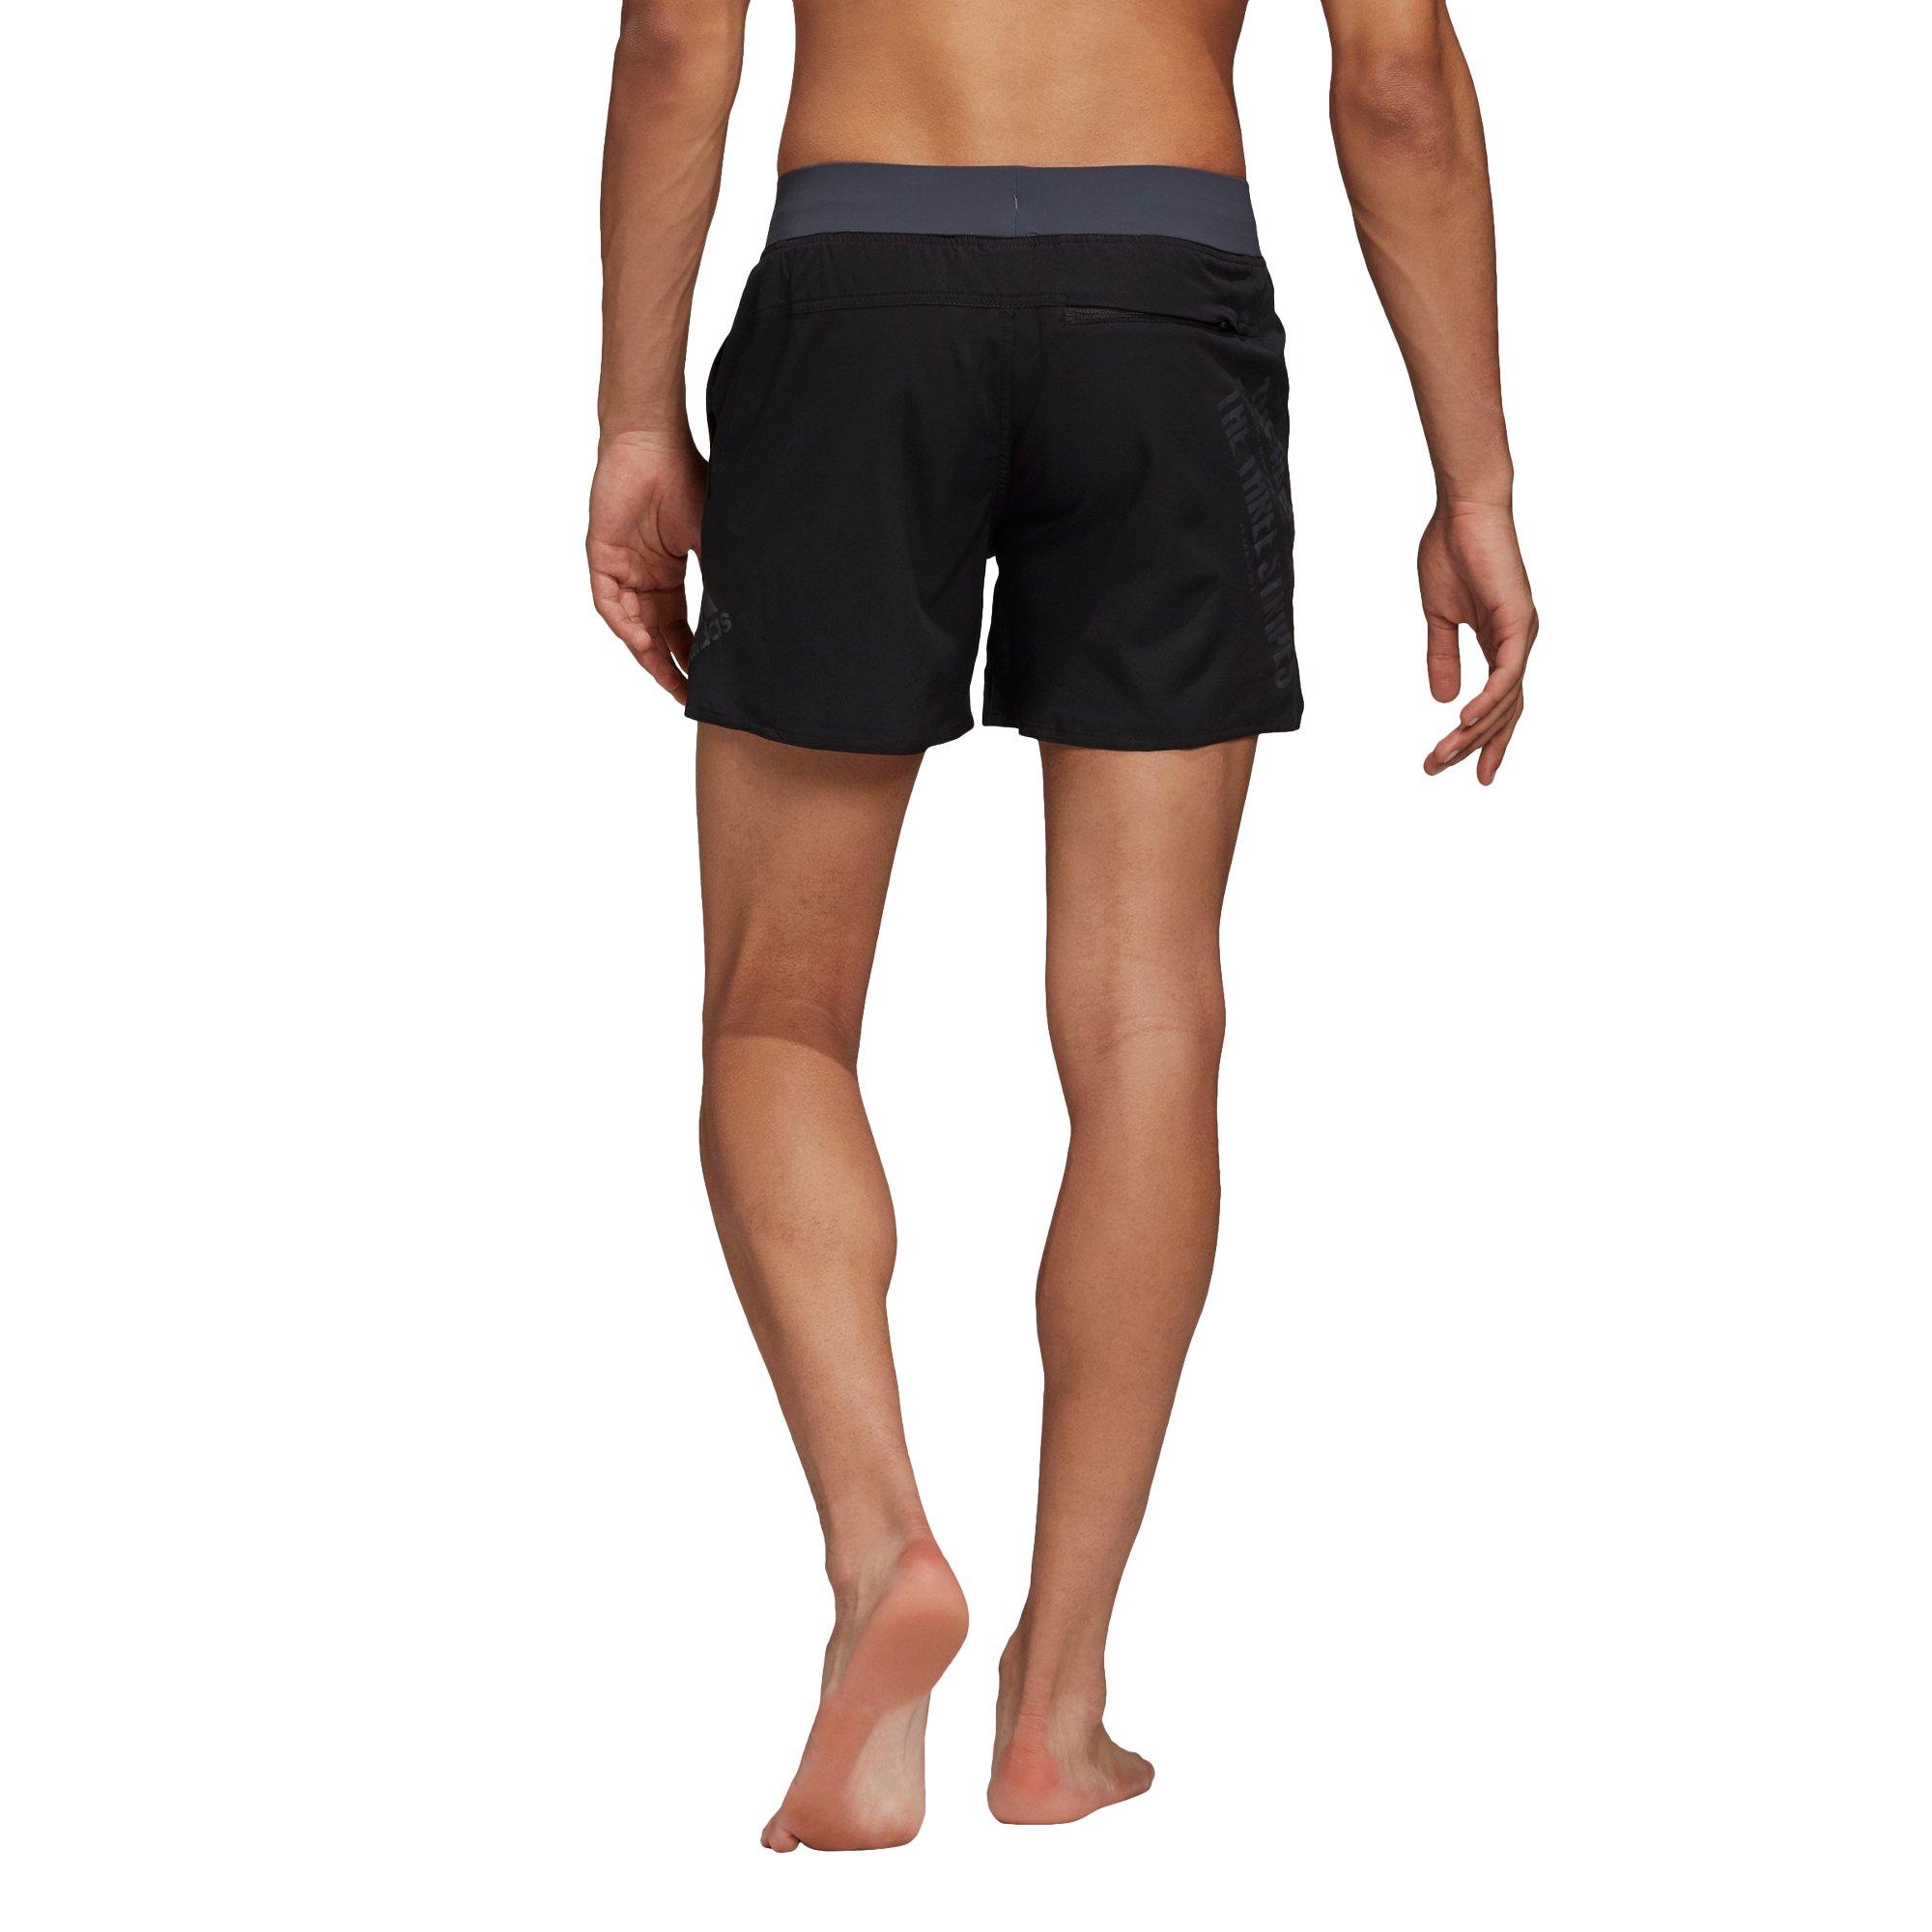 adidas swim shorts with zip pocket